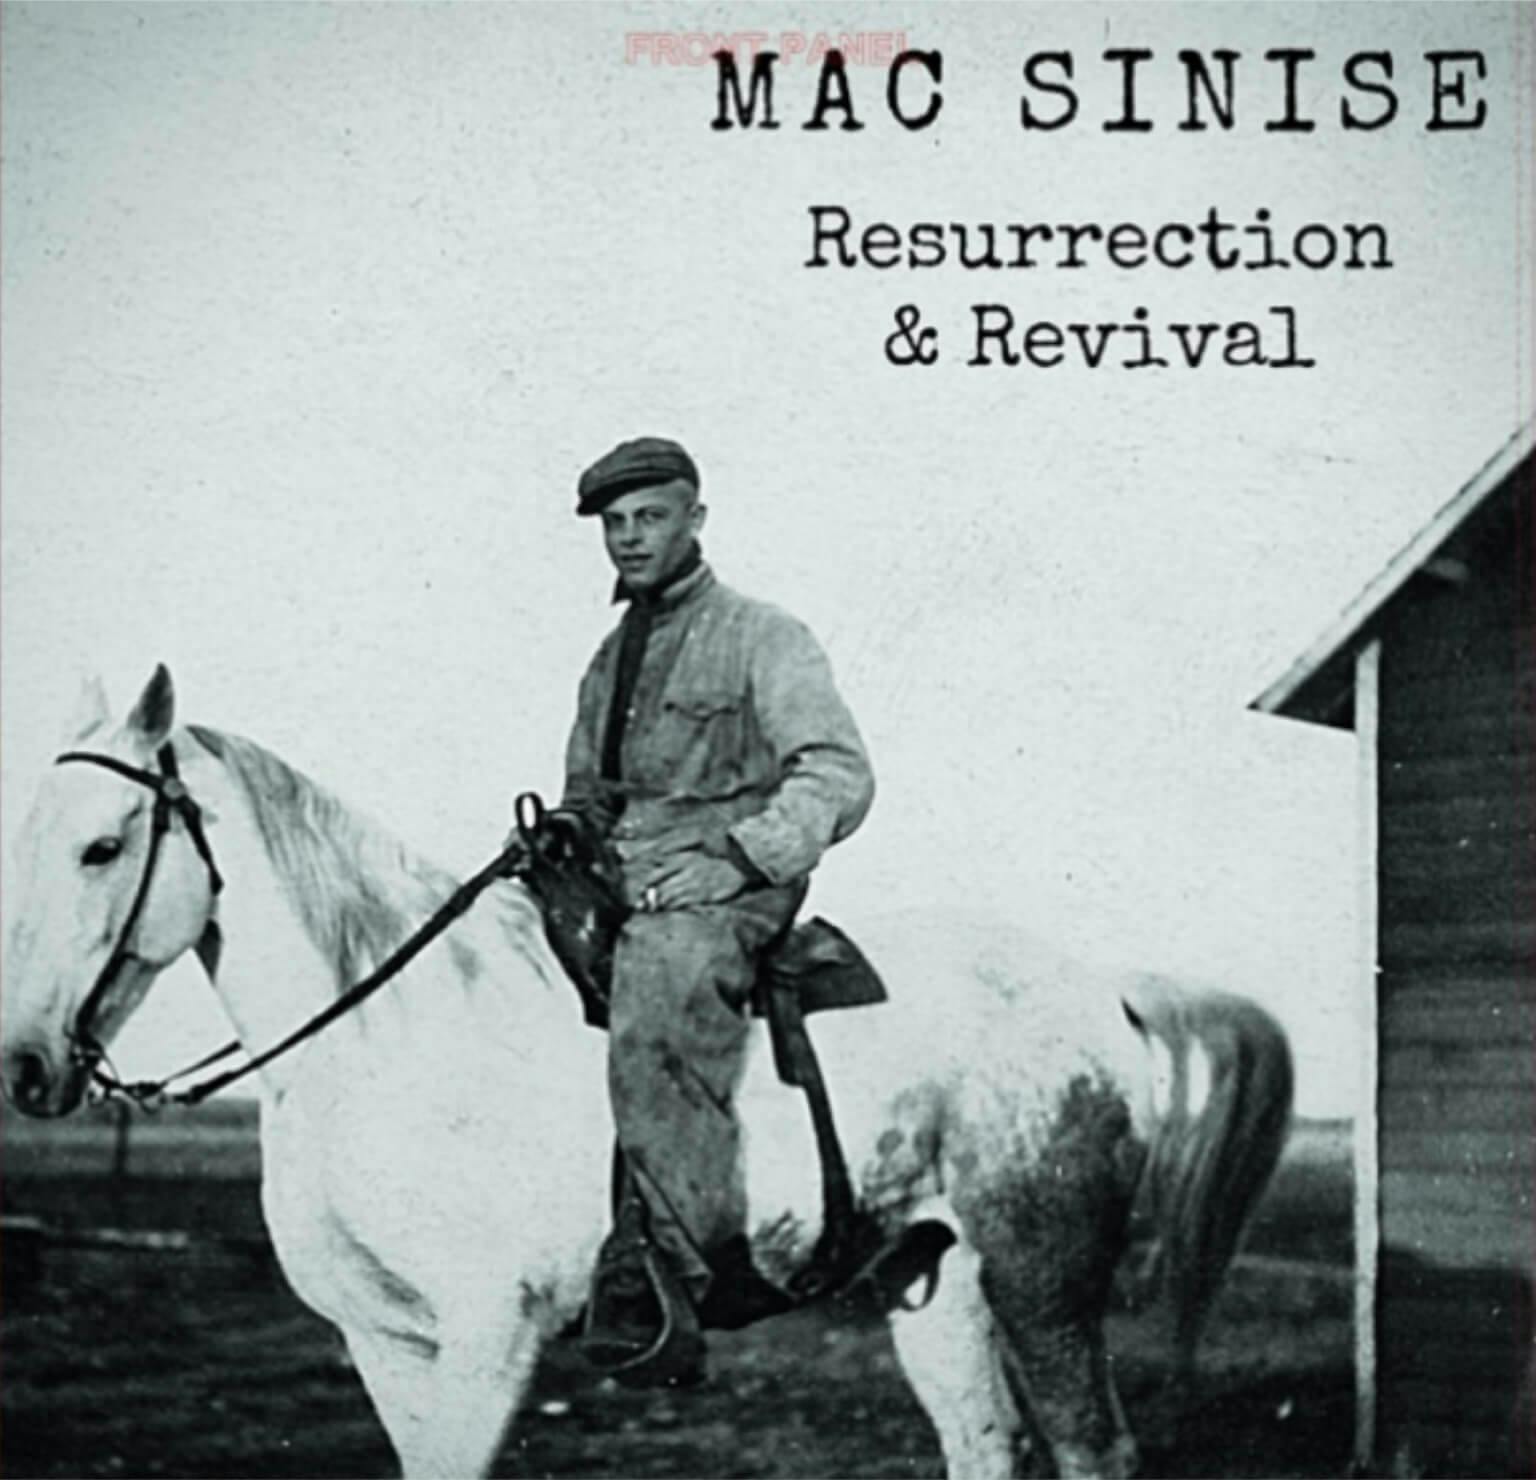 Cover art for “Resurrection & Revival”, Mac's forthcoming album.